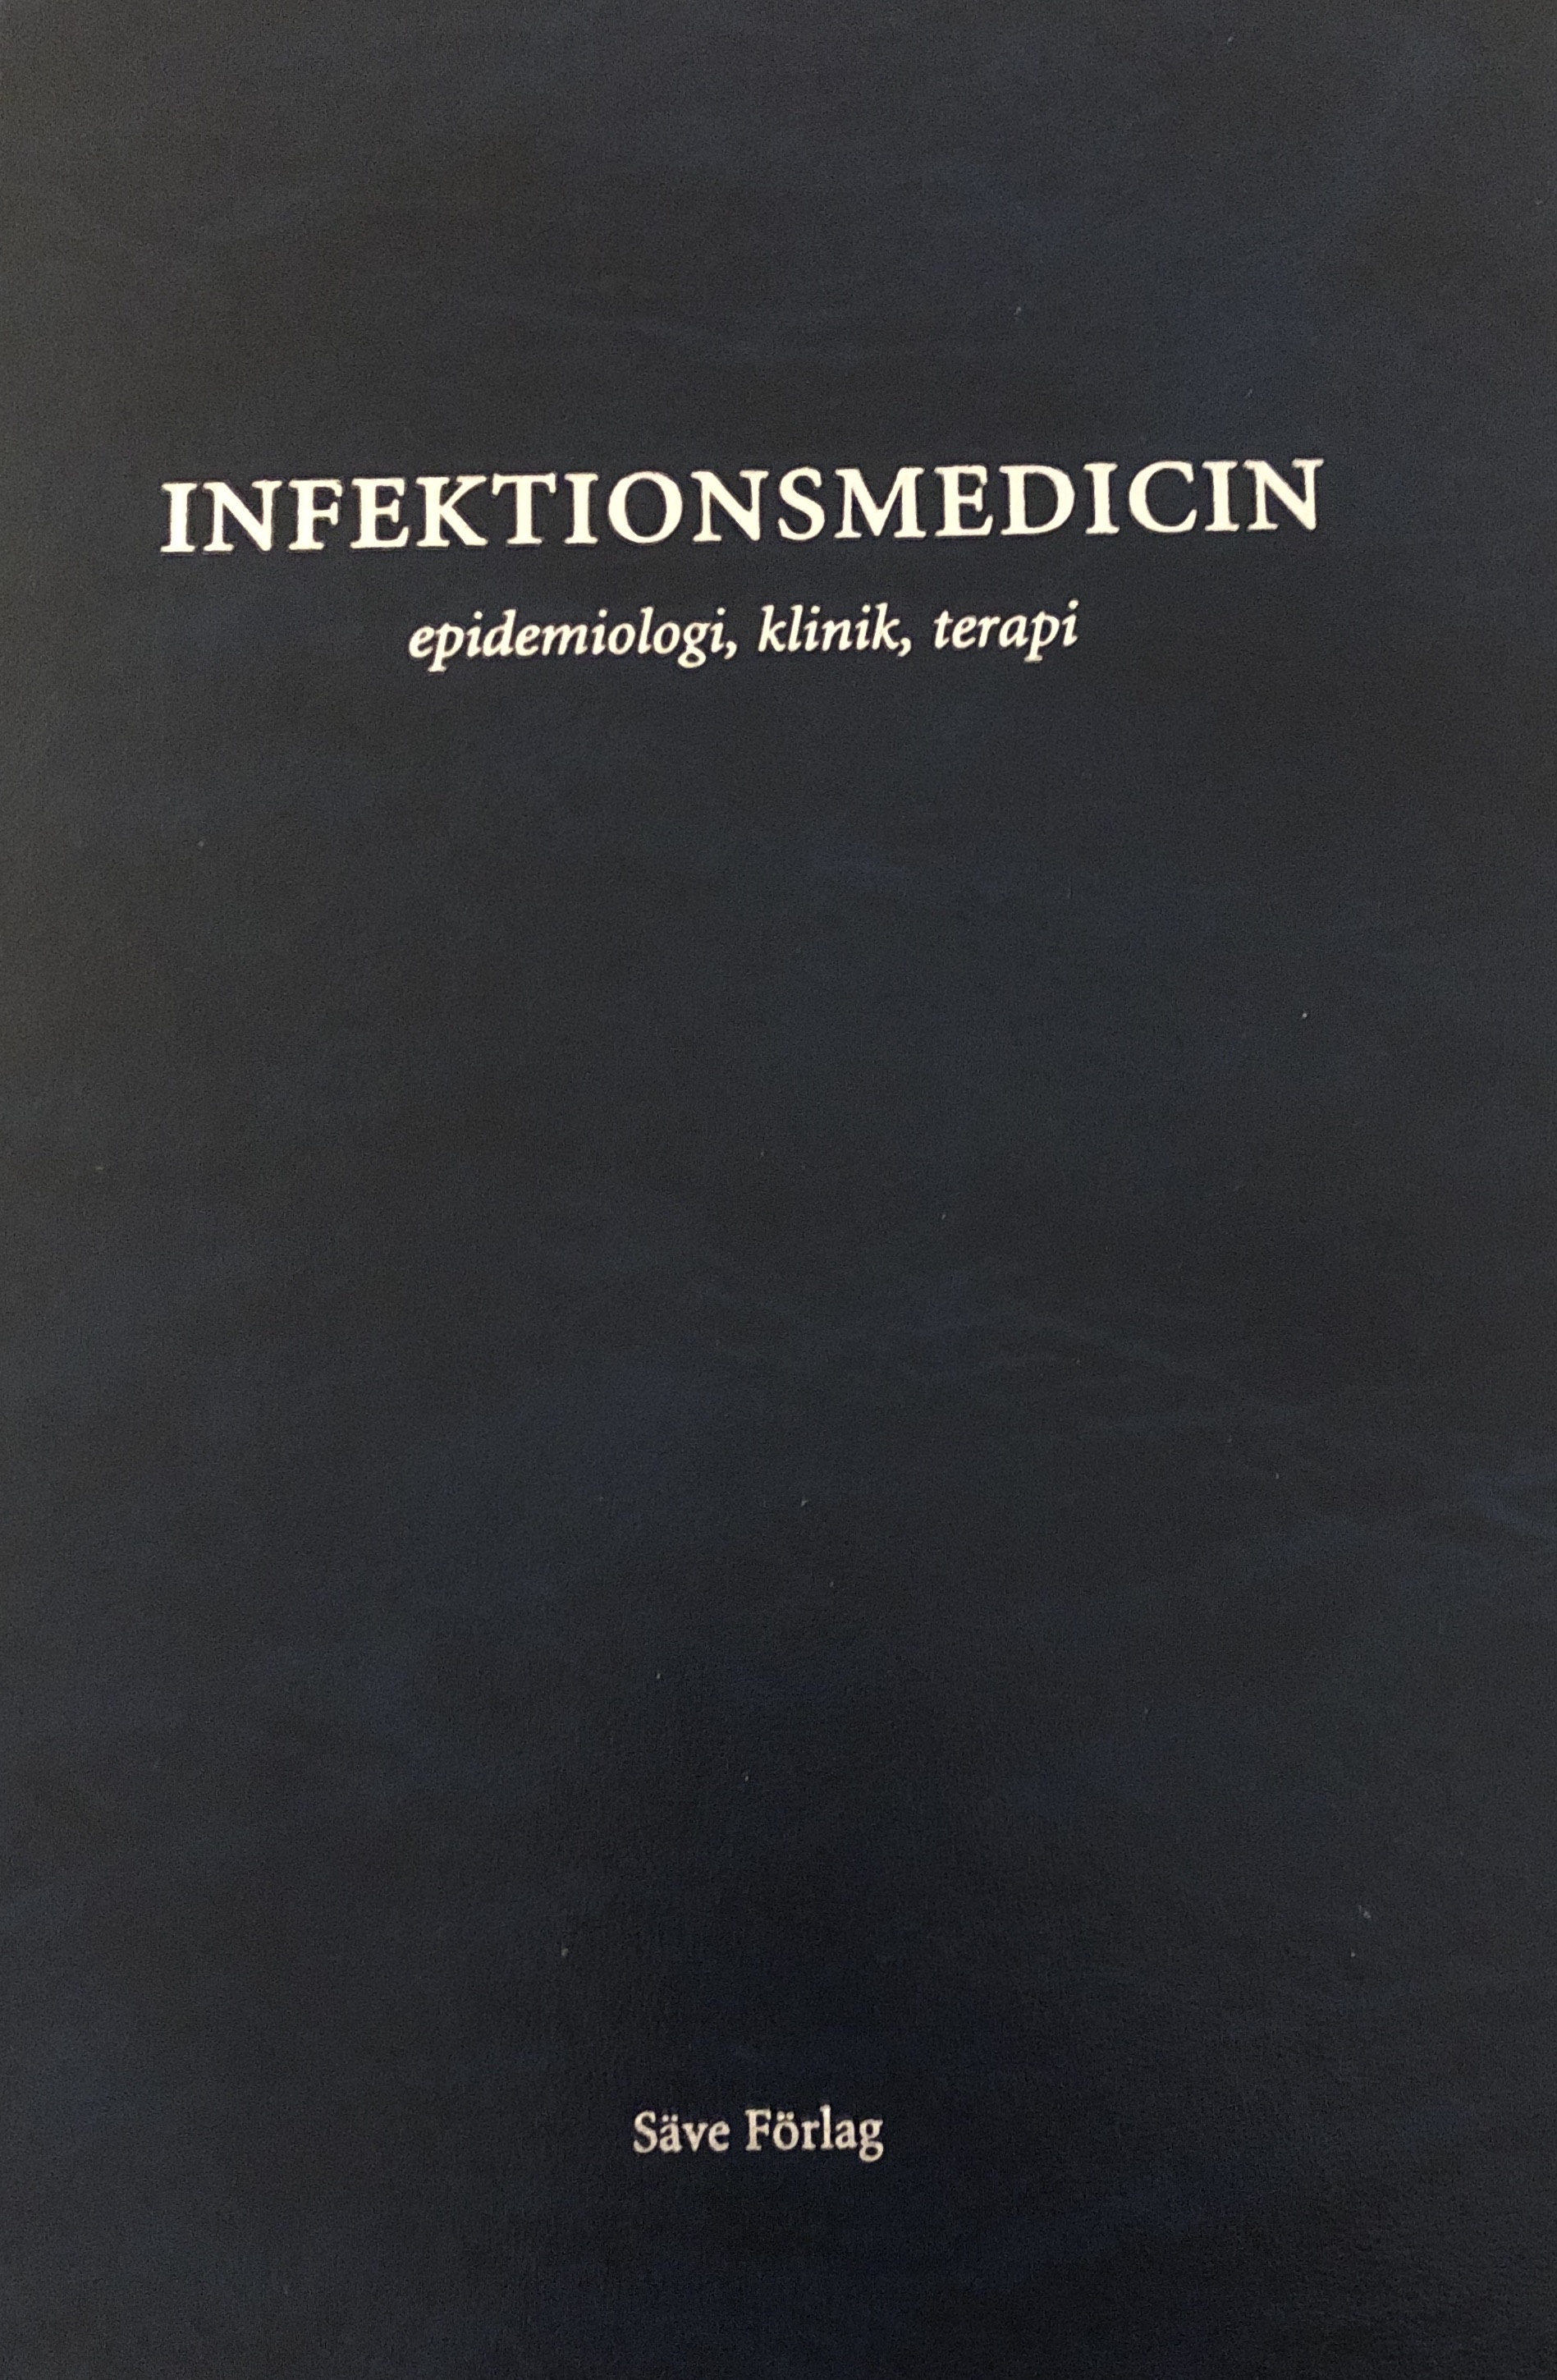 Infektionsmedicin epidemiologi, klinik, terapi; Sten Iwarson; 2014